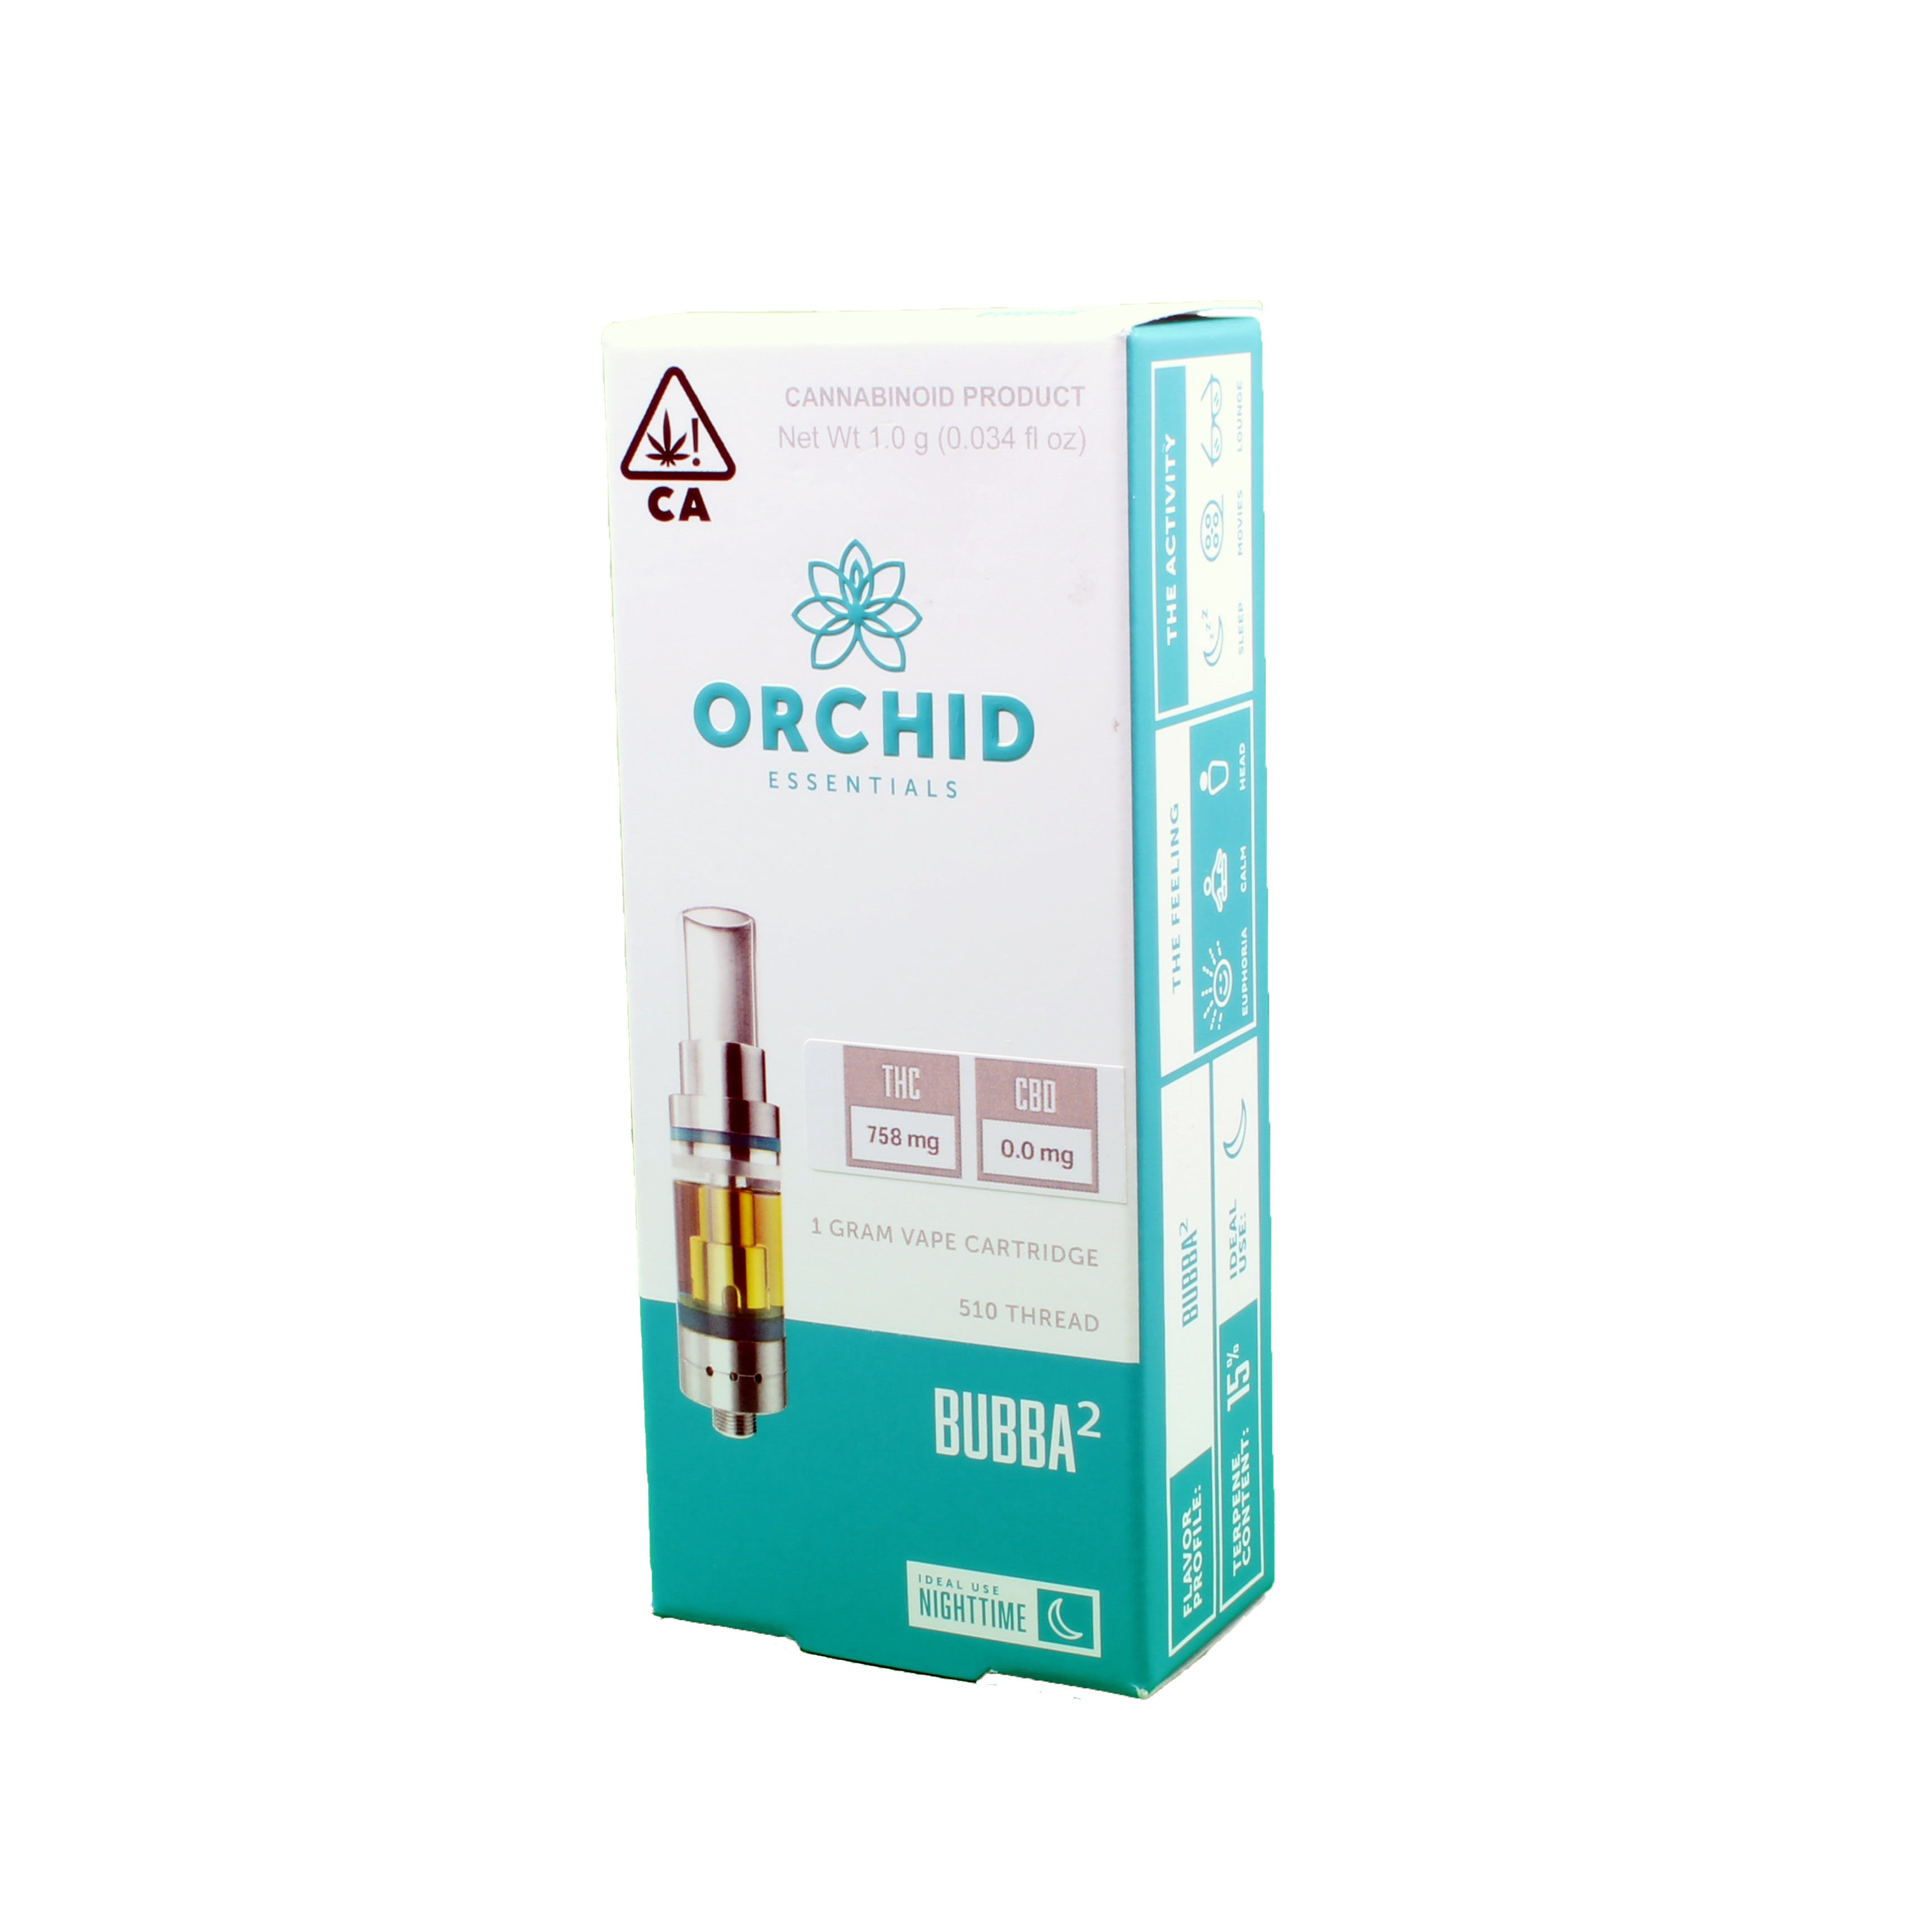 Orchid Essentials - Bubba 1g Cartridge